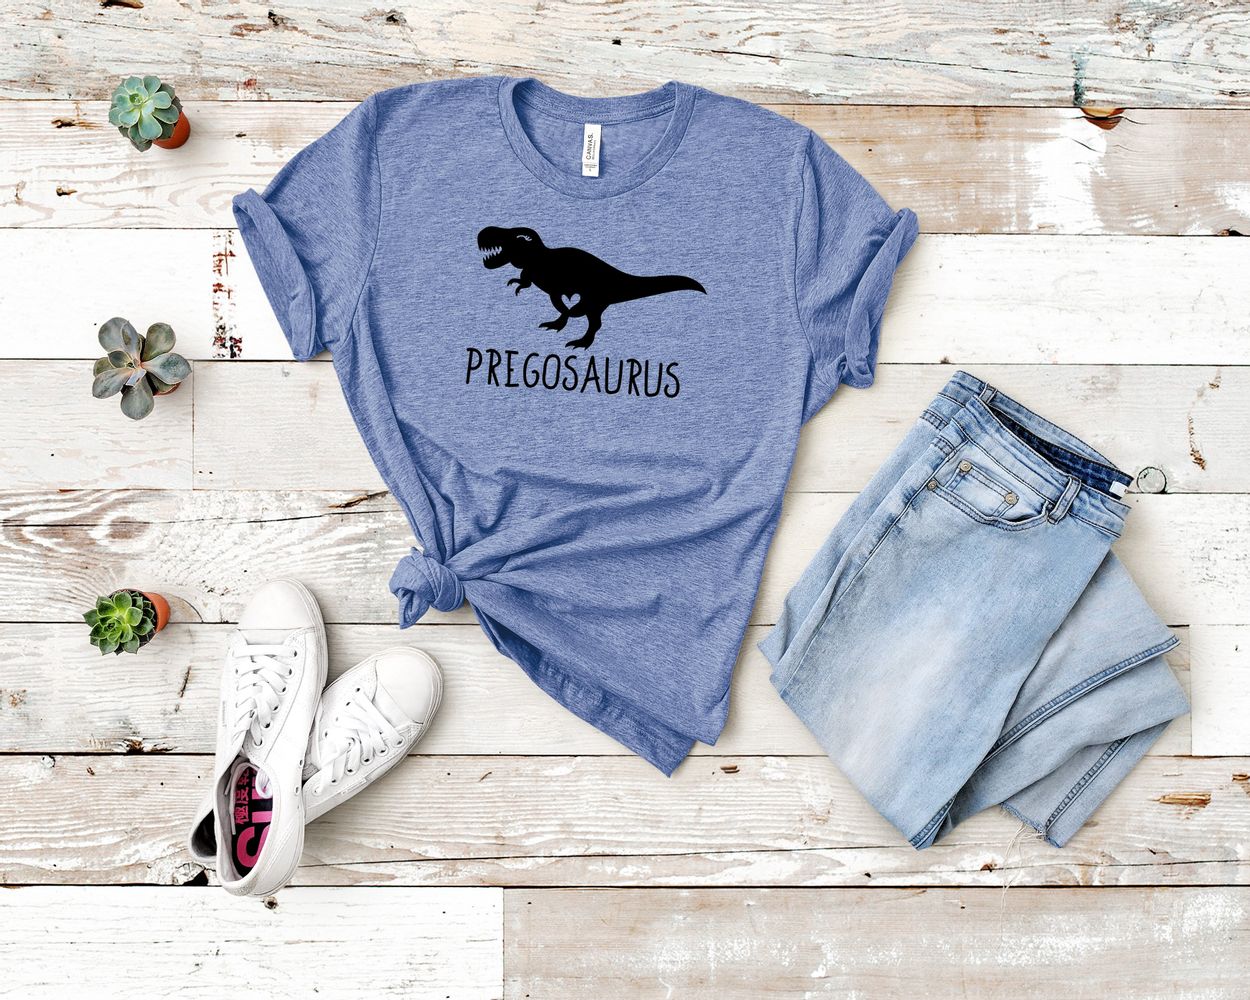 Camiseta de gravidez de dinossauro Pregosaurus